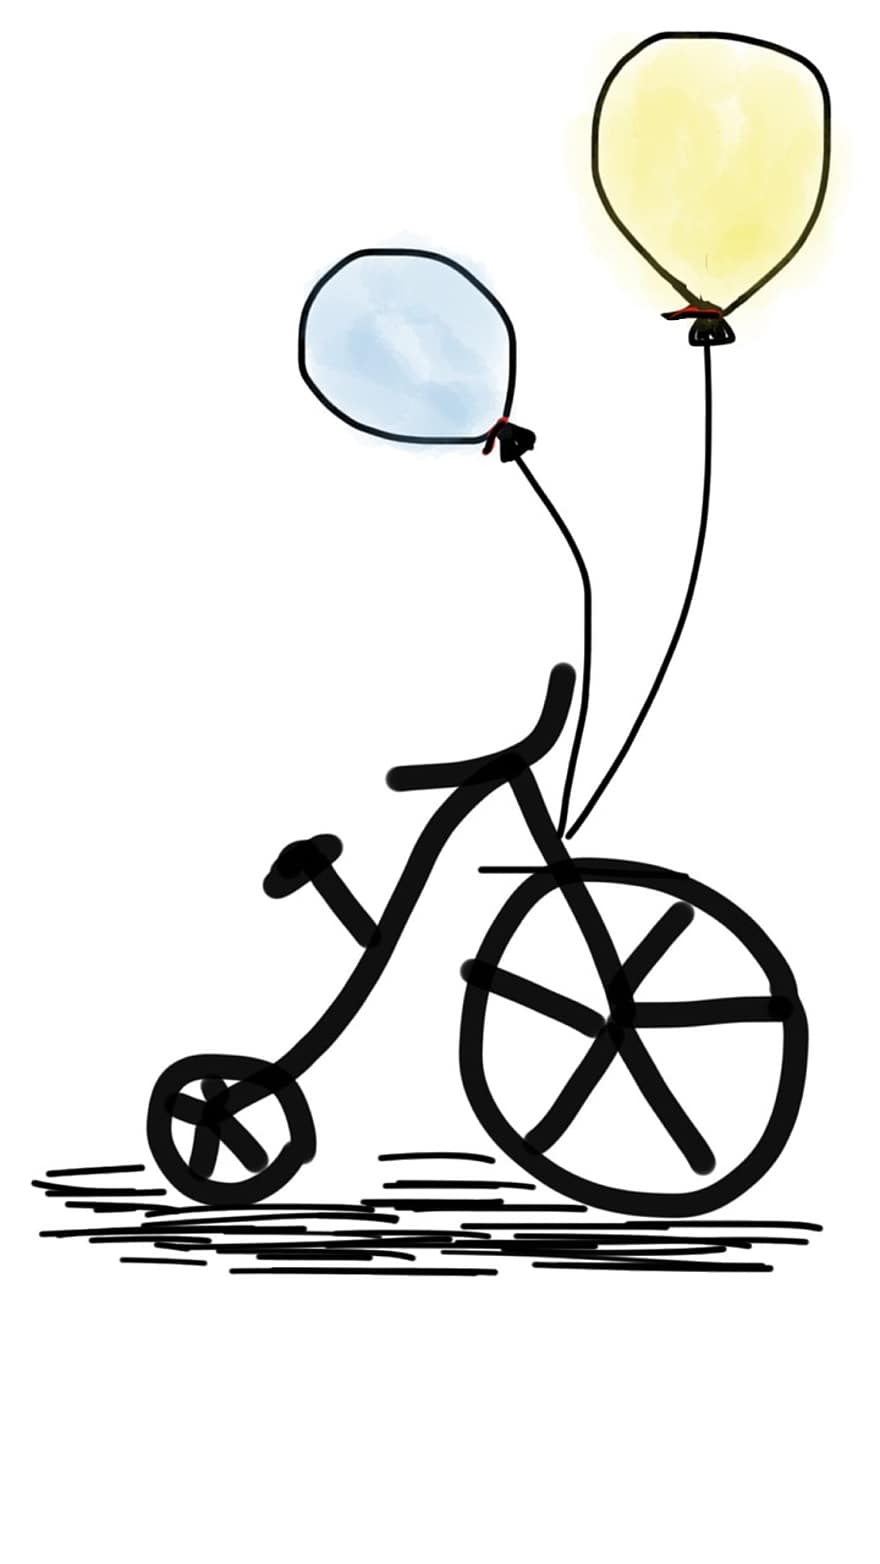 sepeda, balon, balon kuning, balon biru, gaya hidup, mengendarai sepeda, bersepeda, olahraga, mengendarai, menyenangkan, di luar rumah